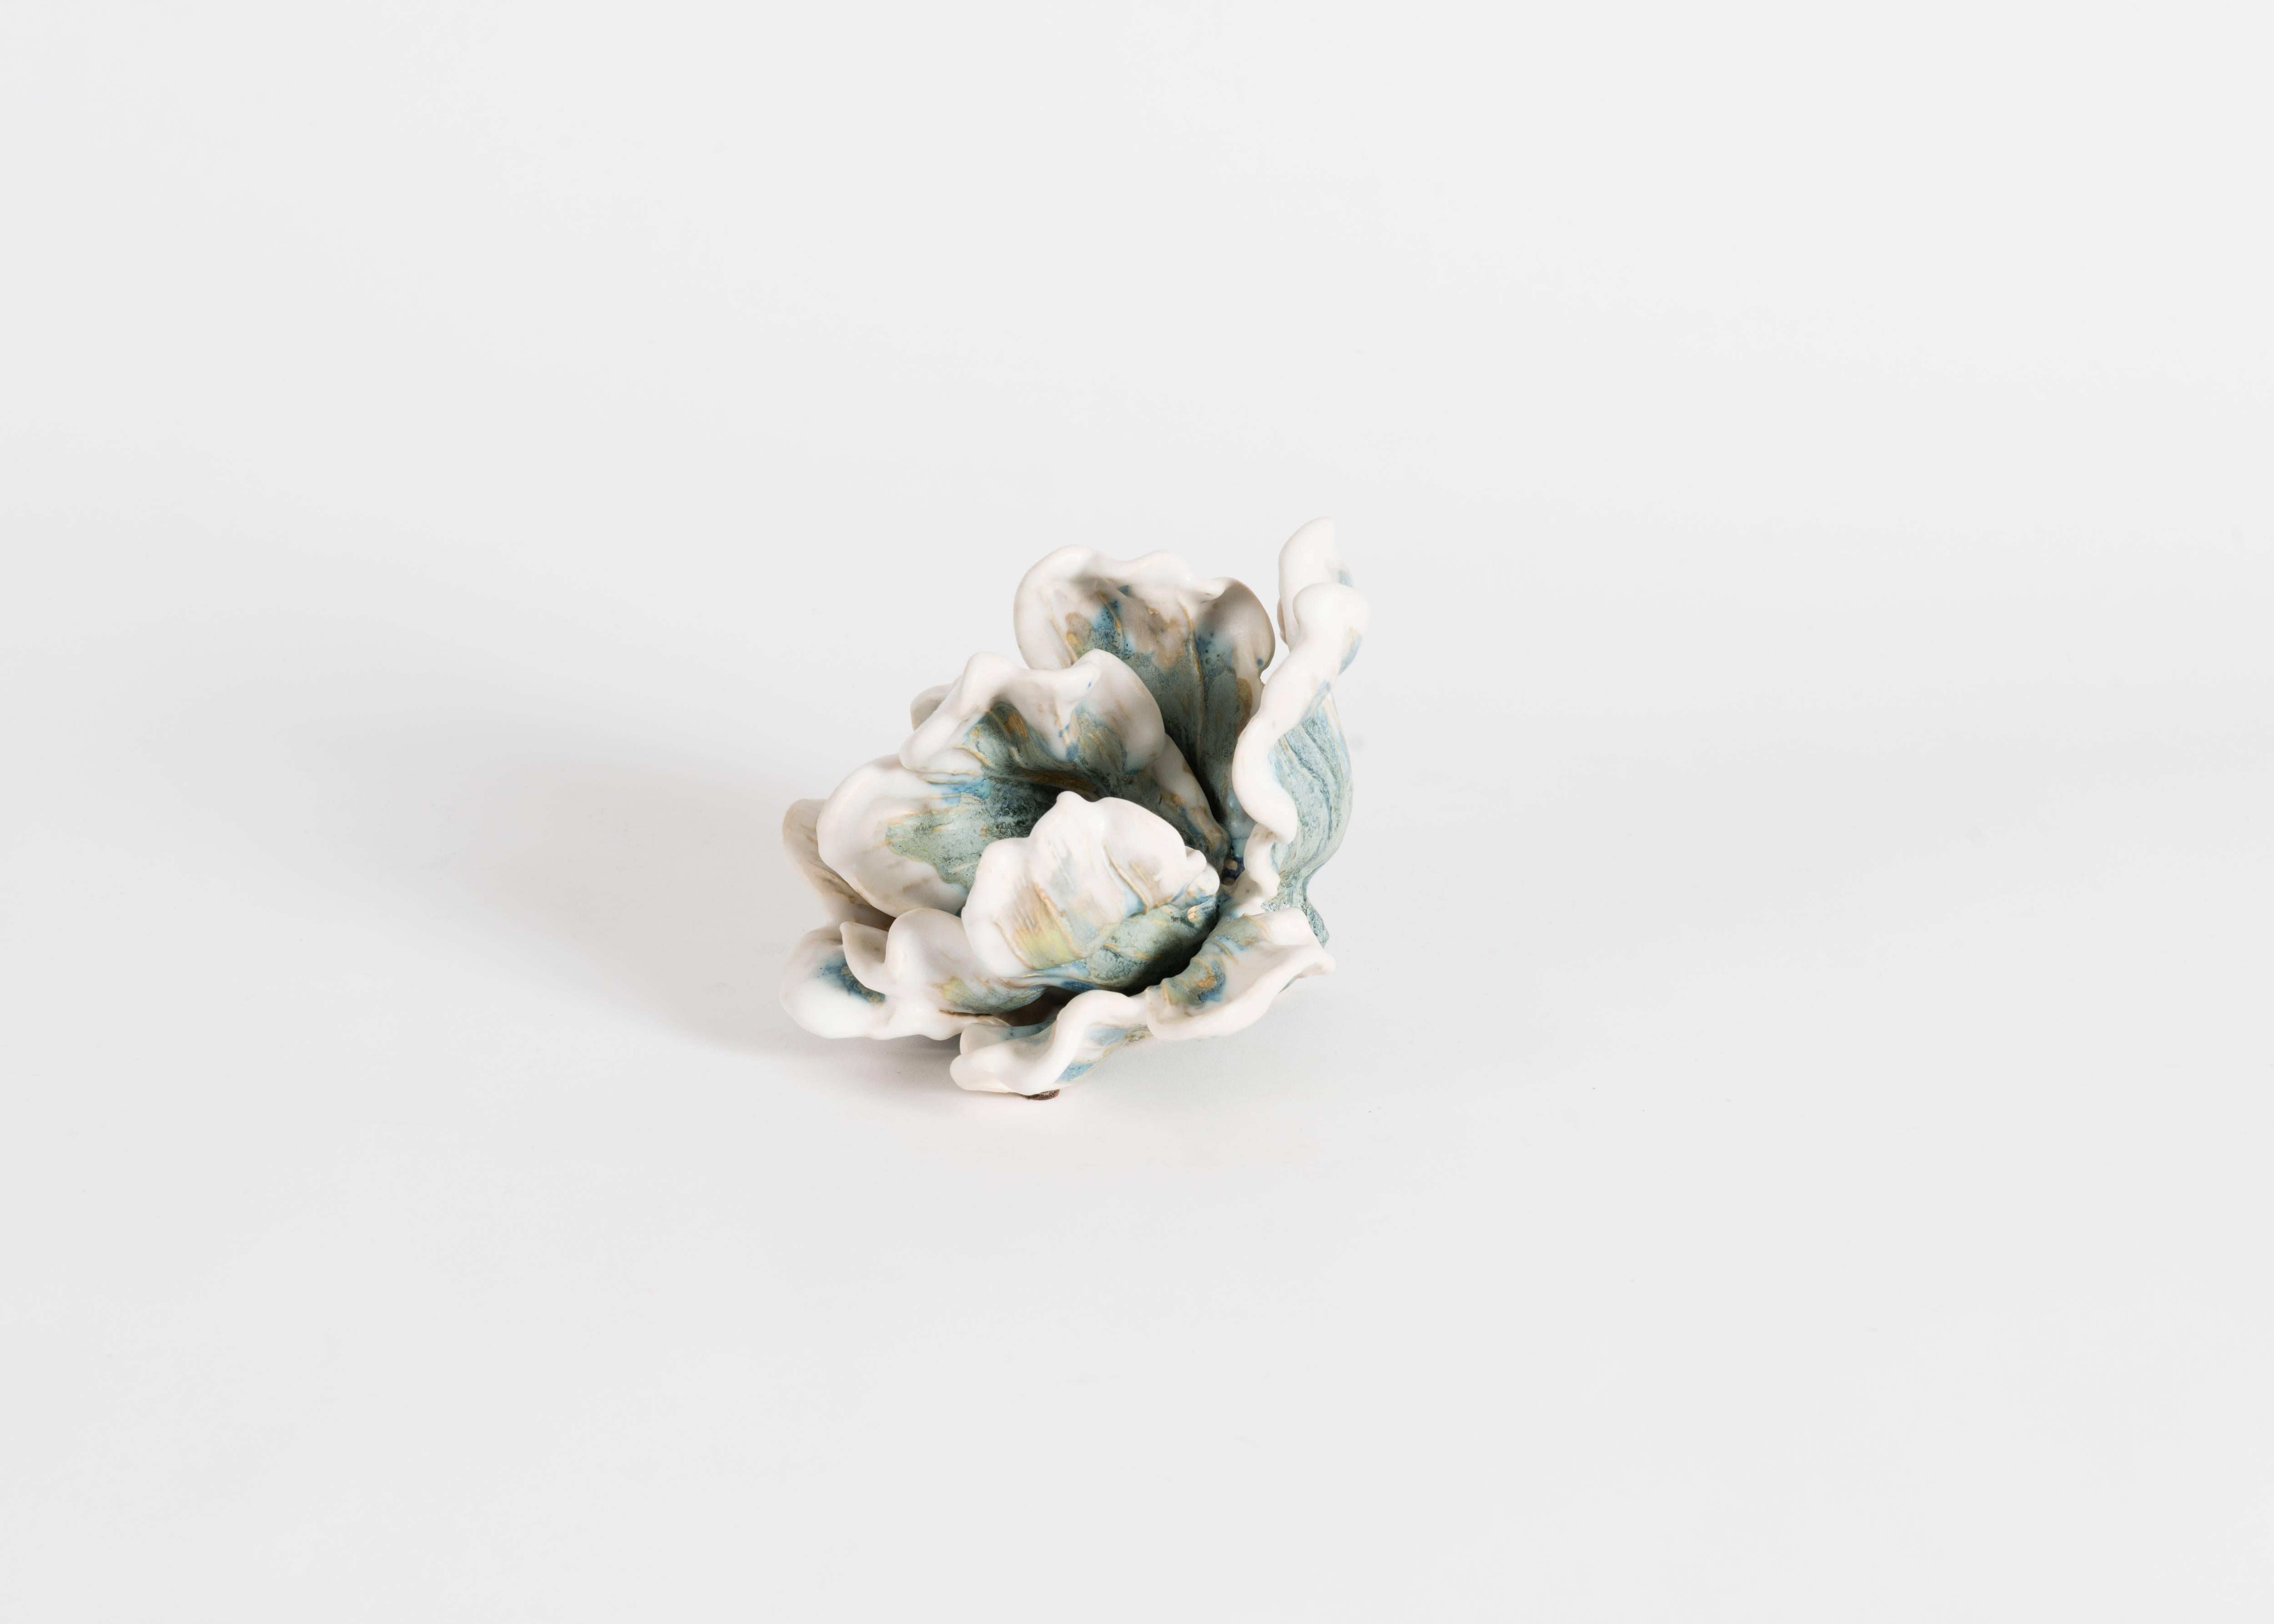 Porcelain Matthew Solomon, Glazed Blue and White Ceramic Tulip, United States, 2016